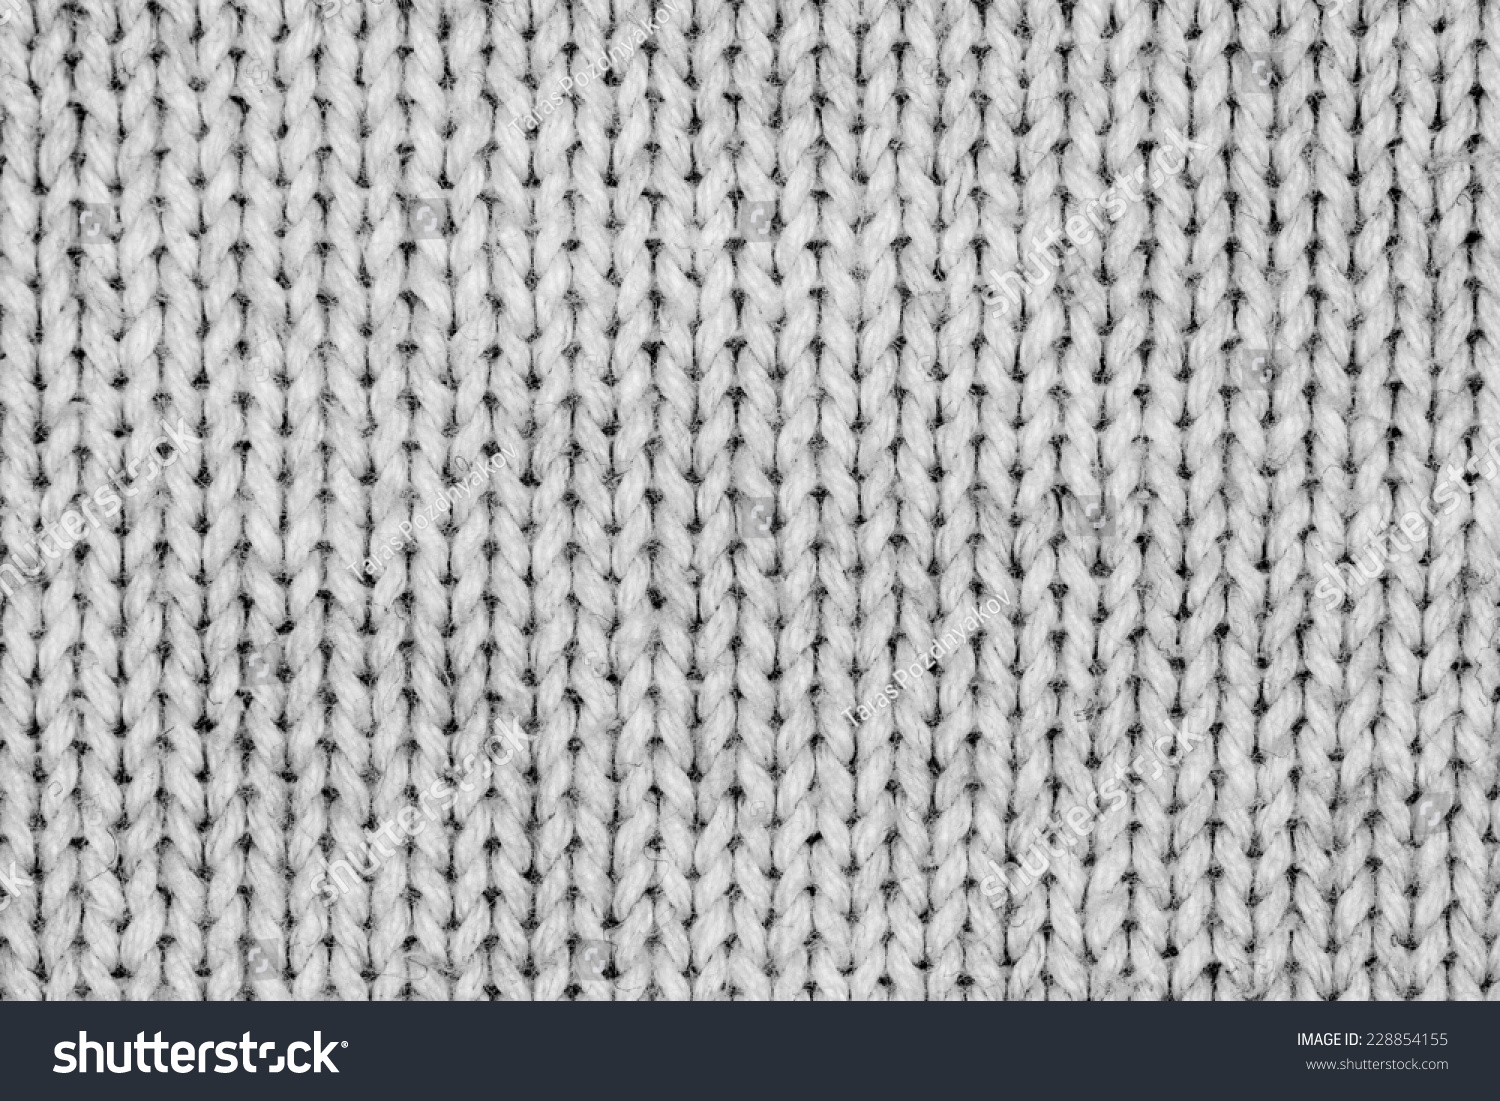 White Knitting Wool Texture Closeup Photo Background. - 228854155 ...